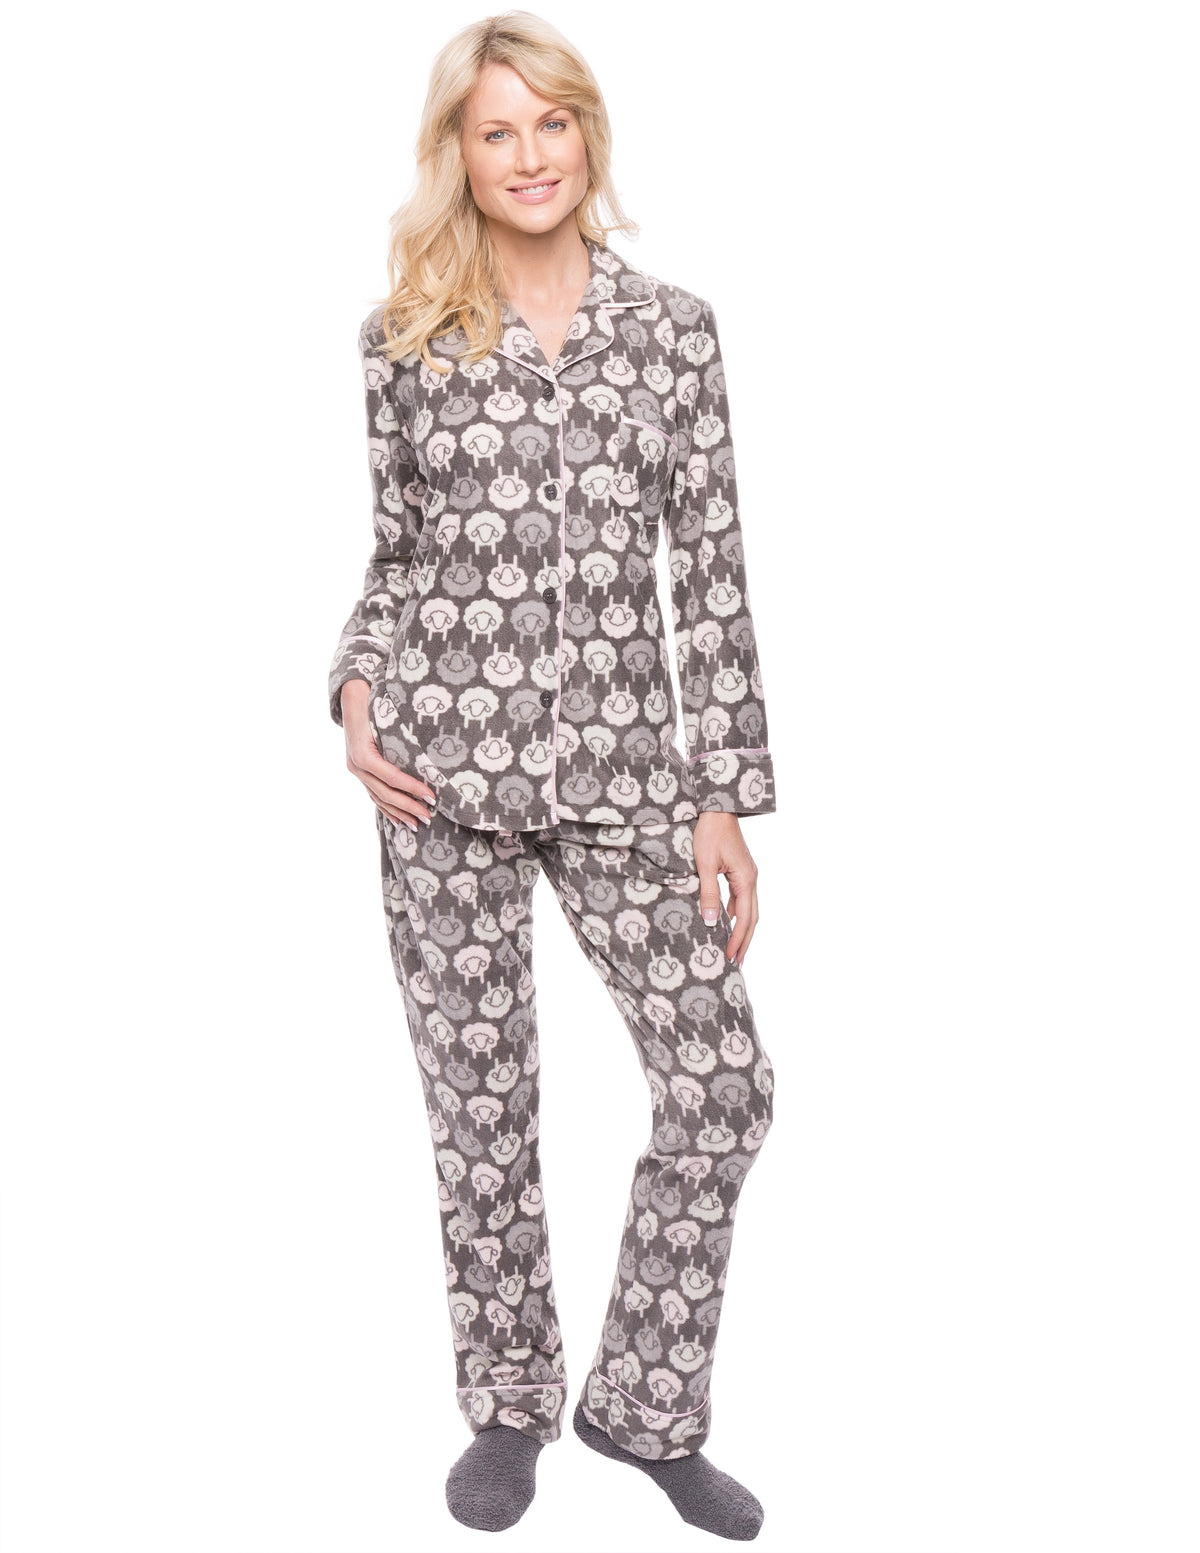 Womens Microfleece Pajama Sleepwear Set - Sheep Charcoal